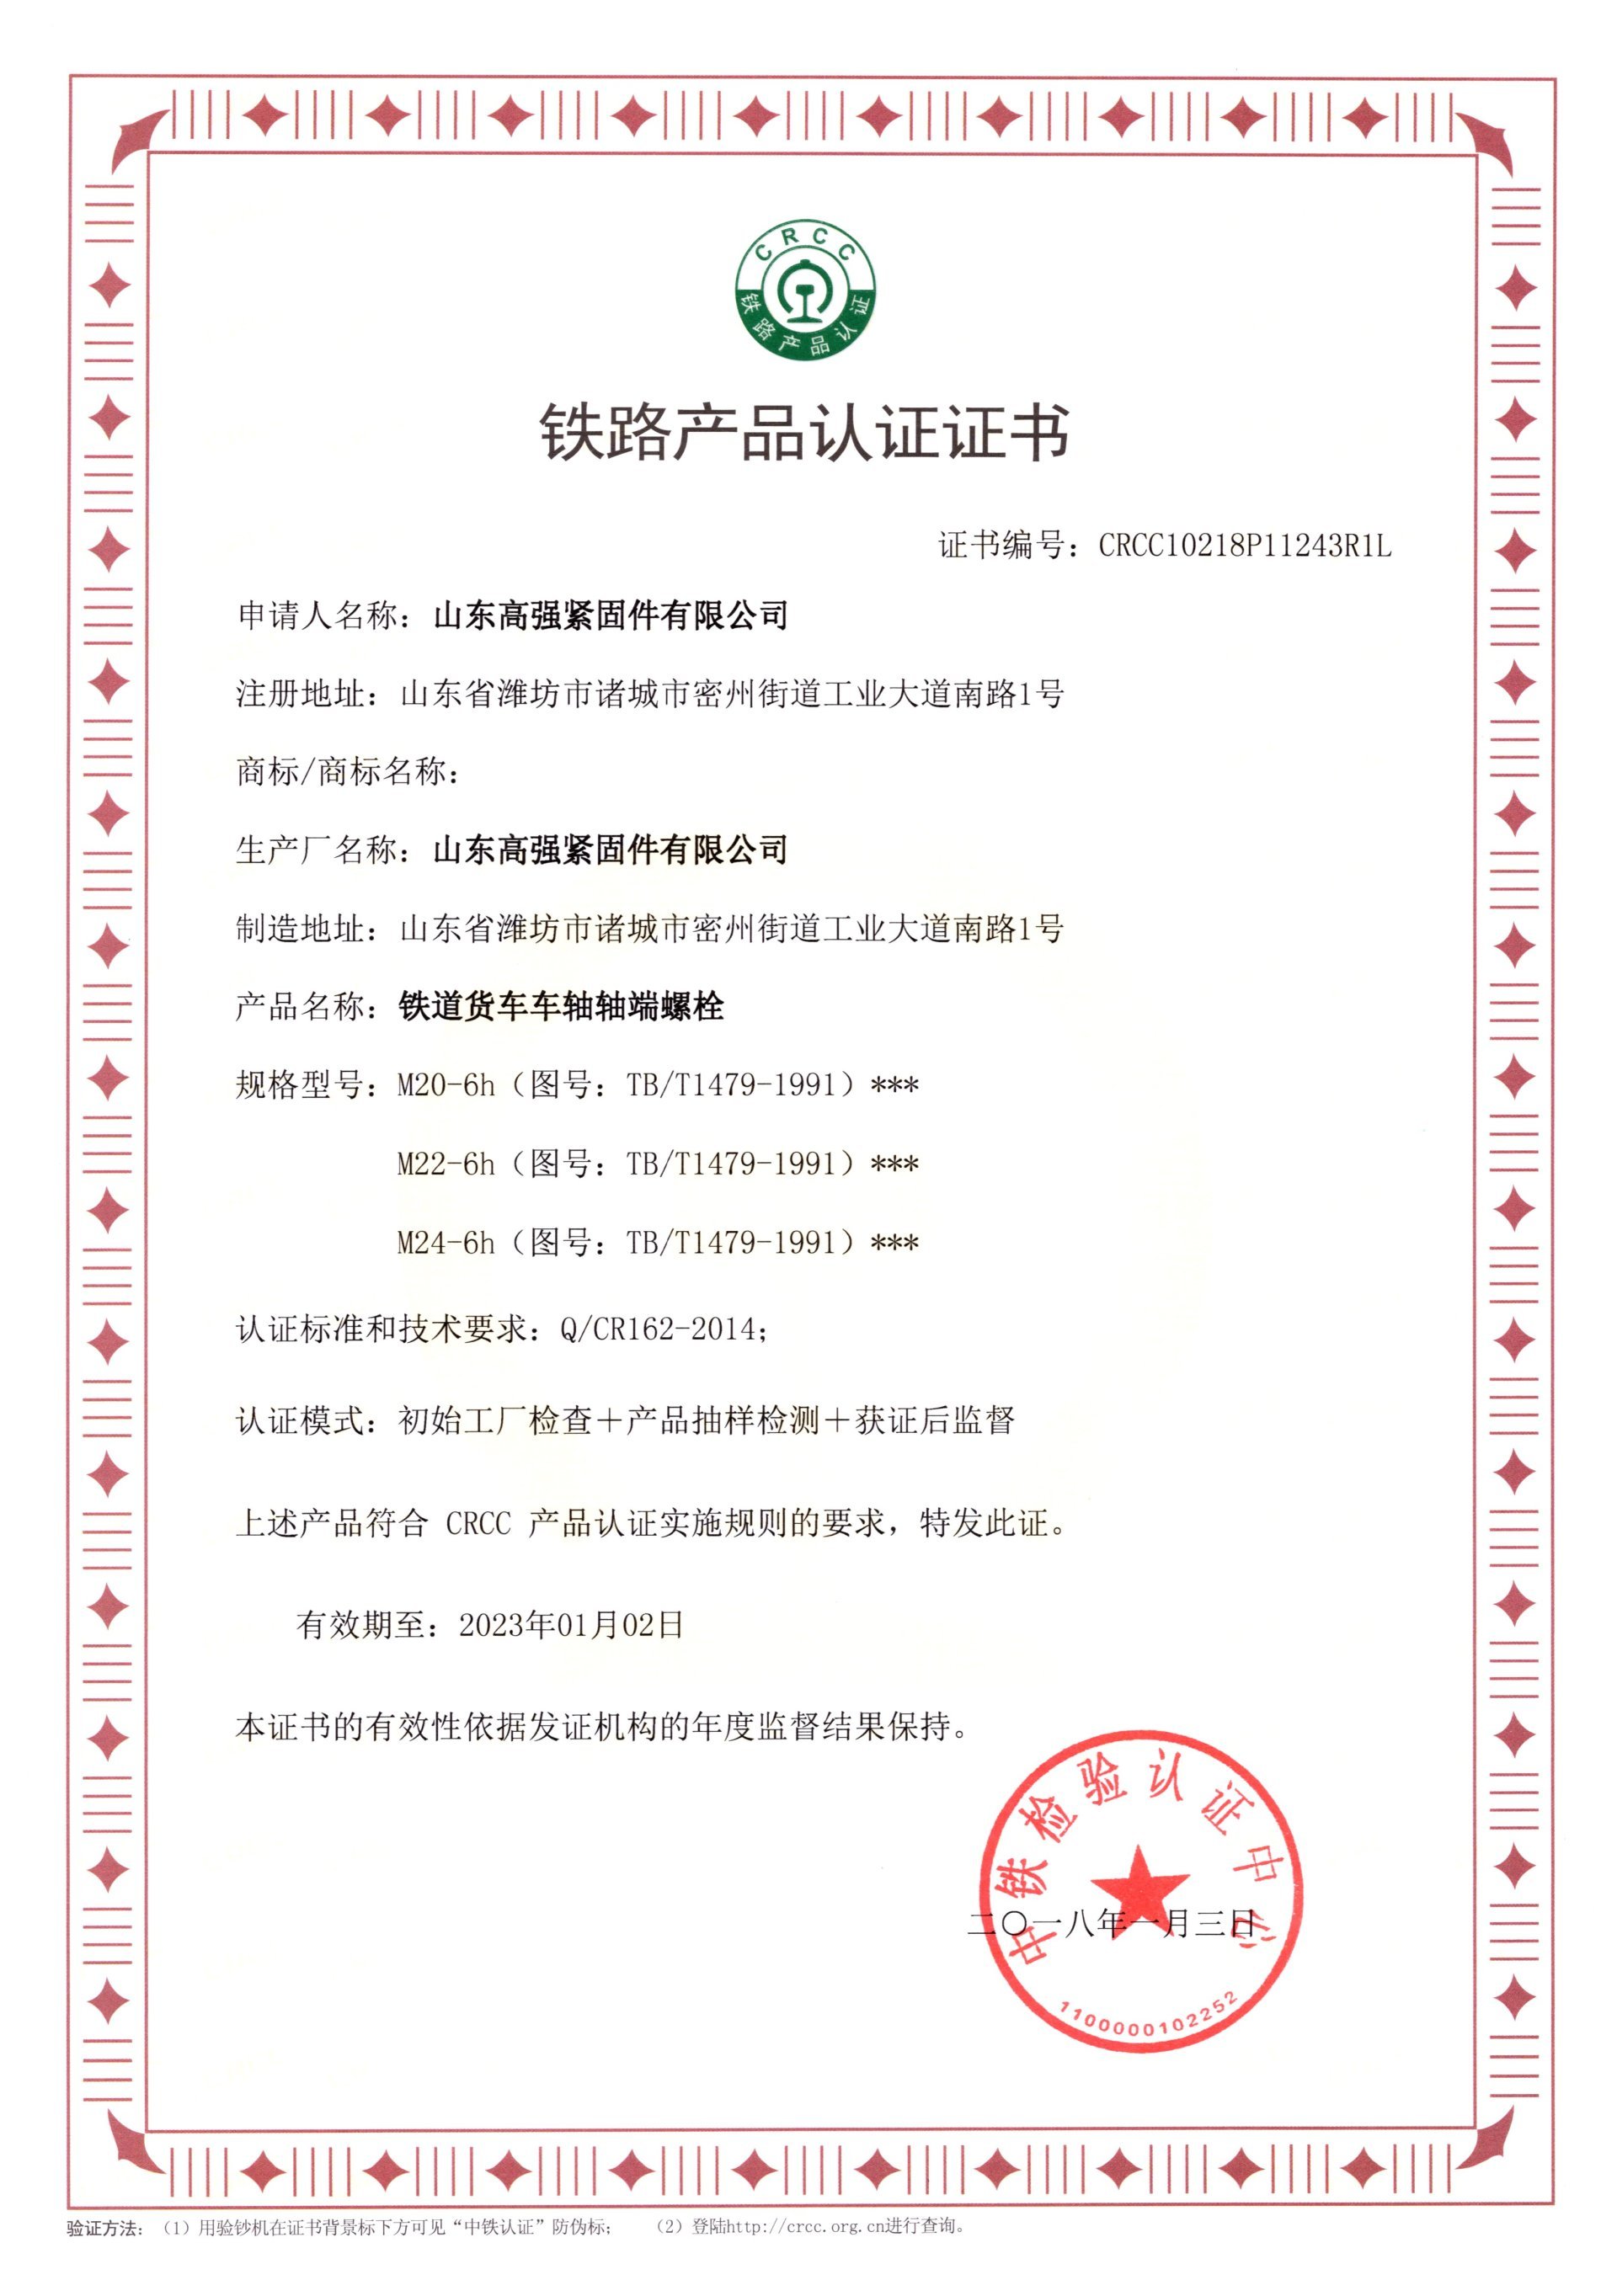 CRCC Railway Certification